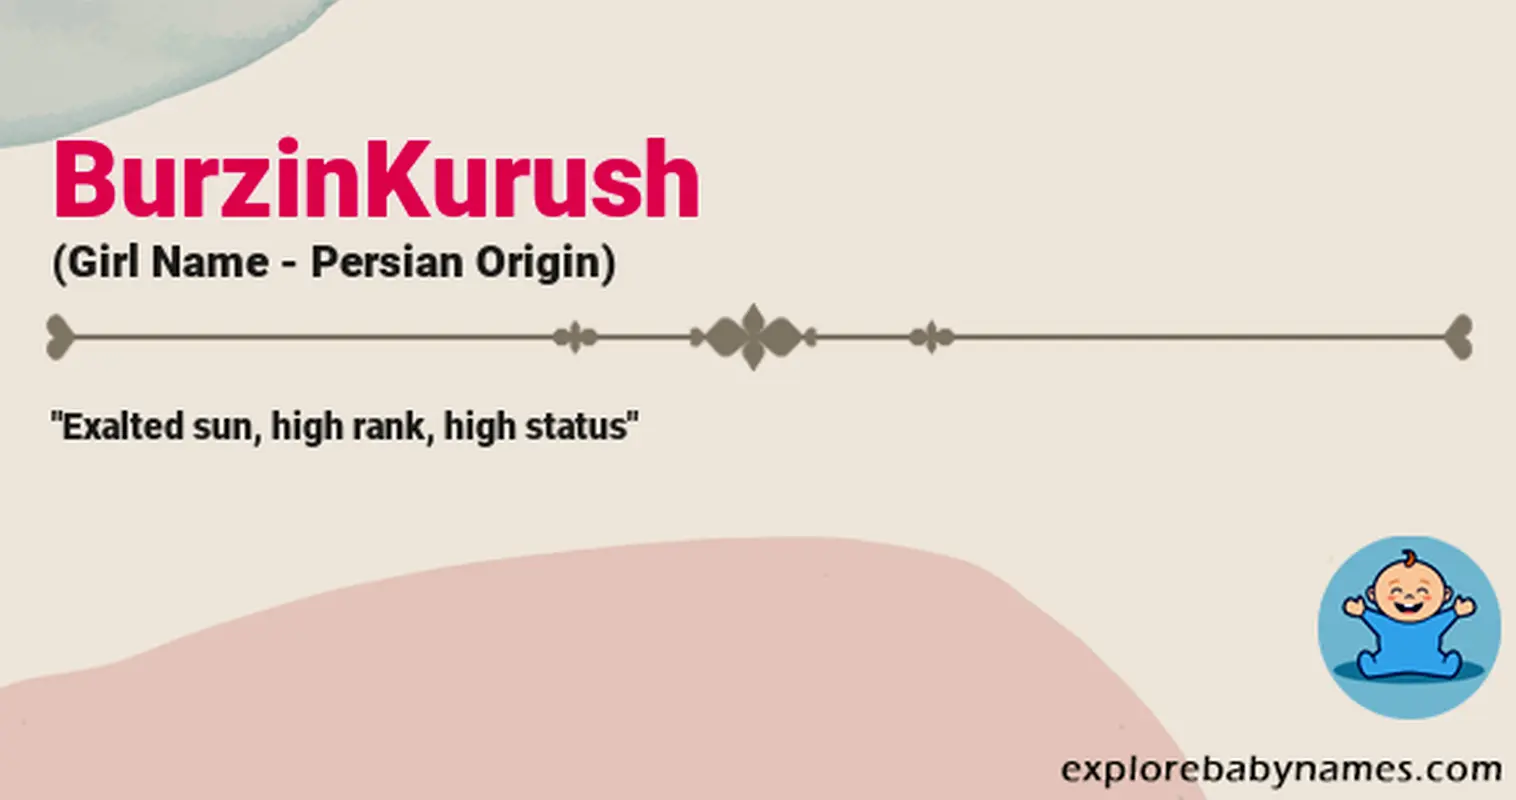 Meaning of BurzinKurush